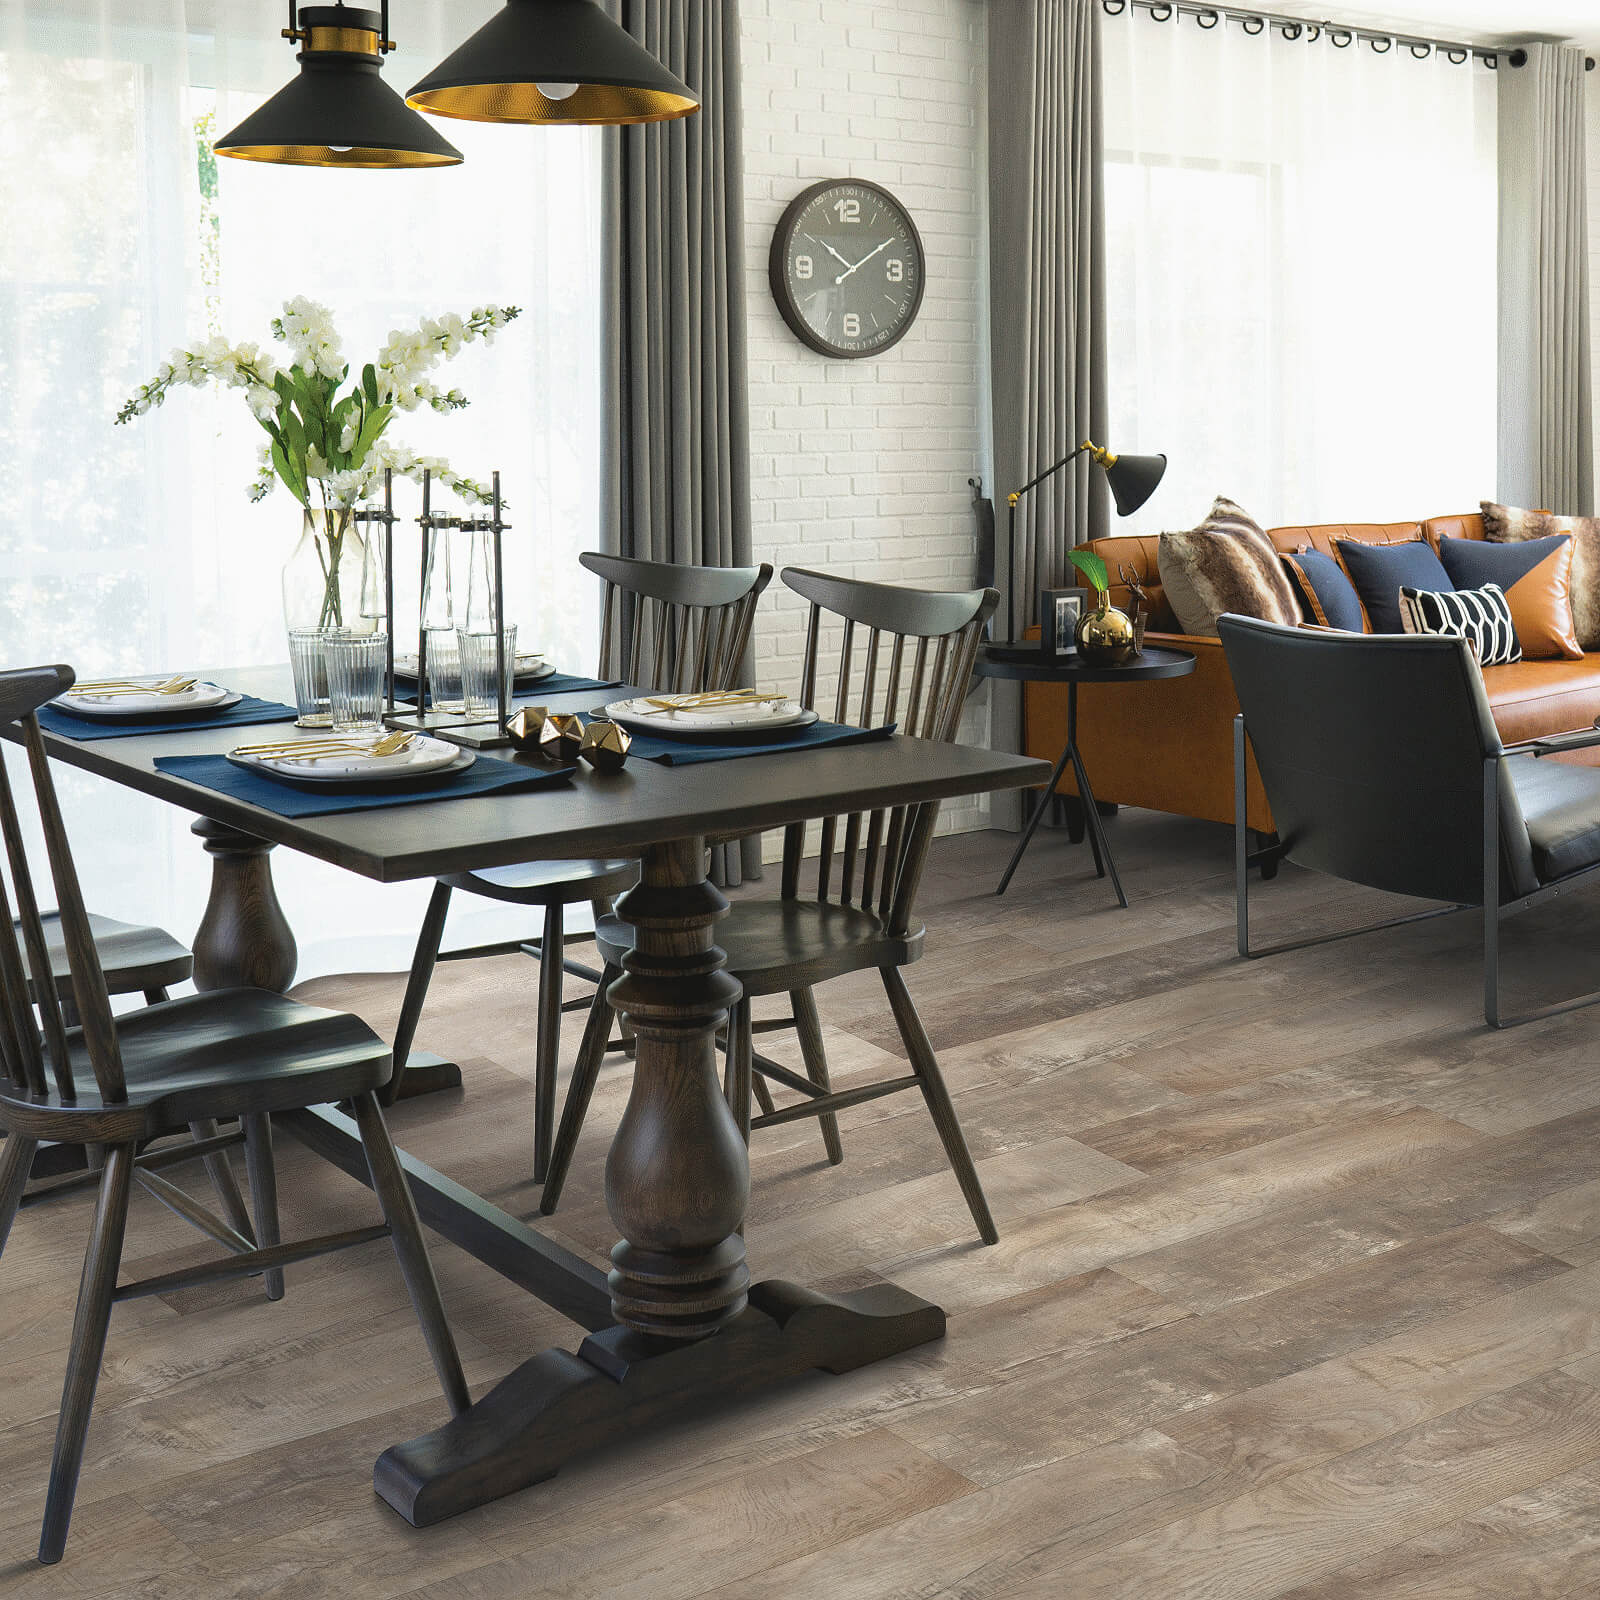 Vinyl plank flooring in kitchen | Dehart Tile